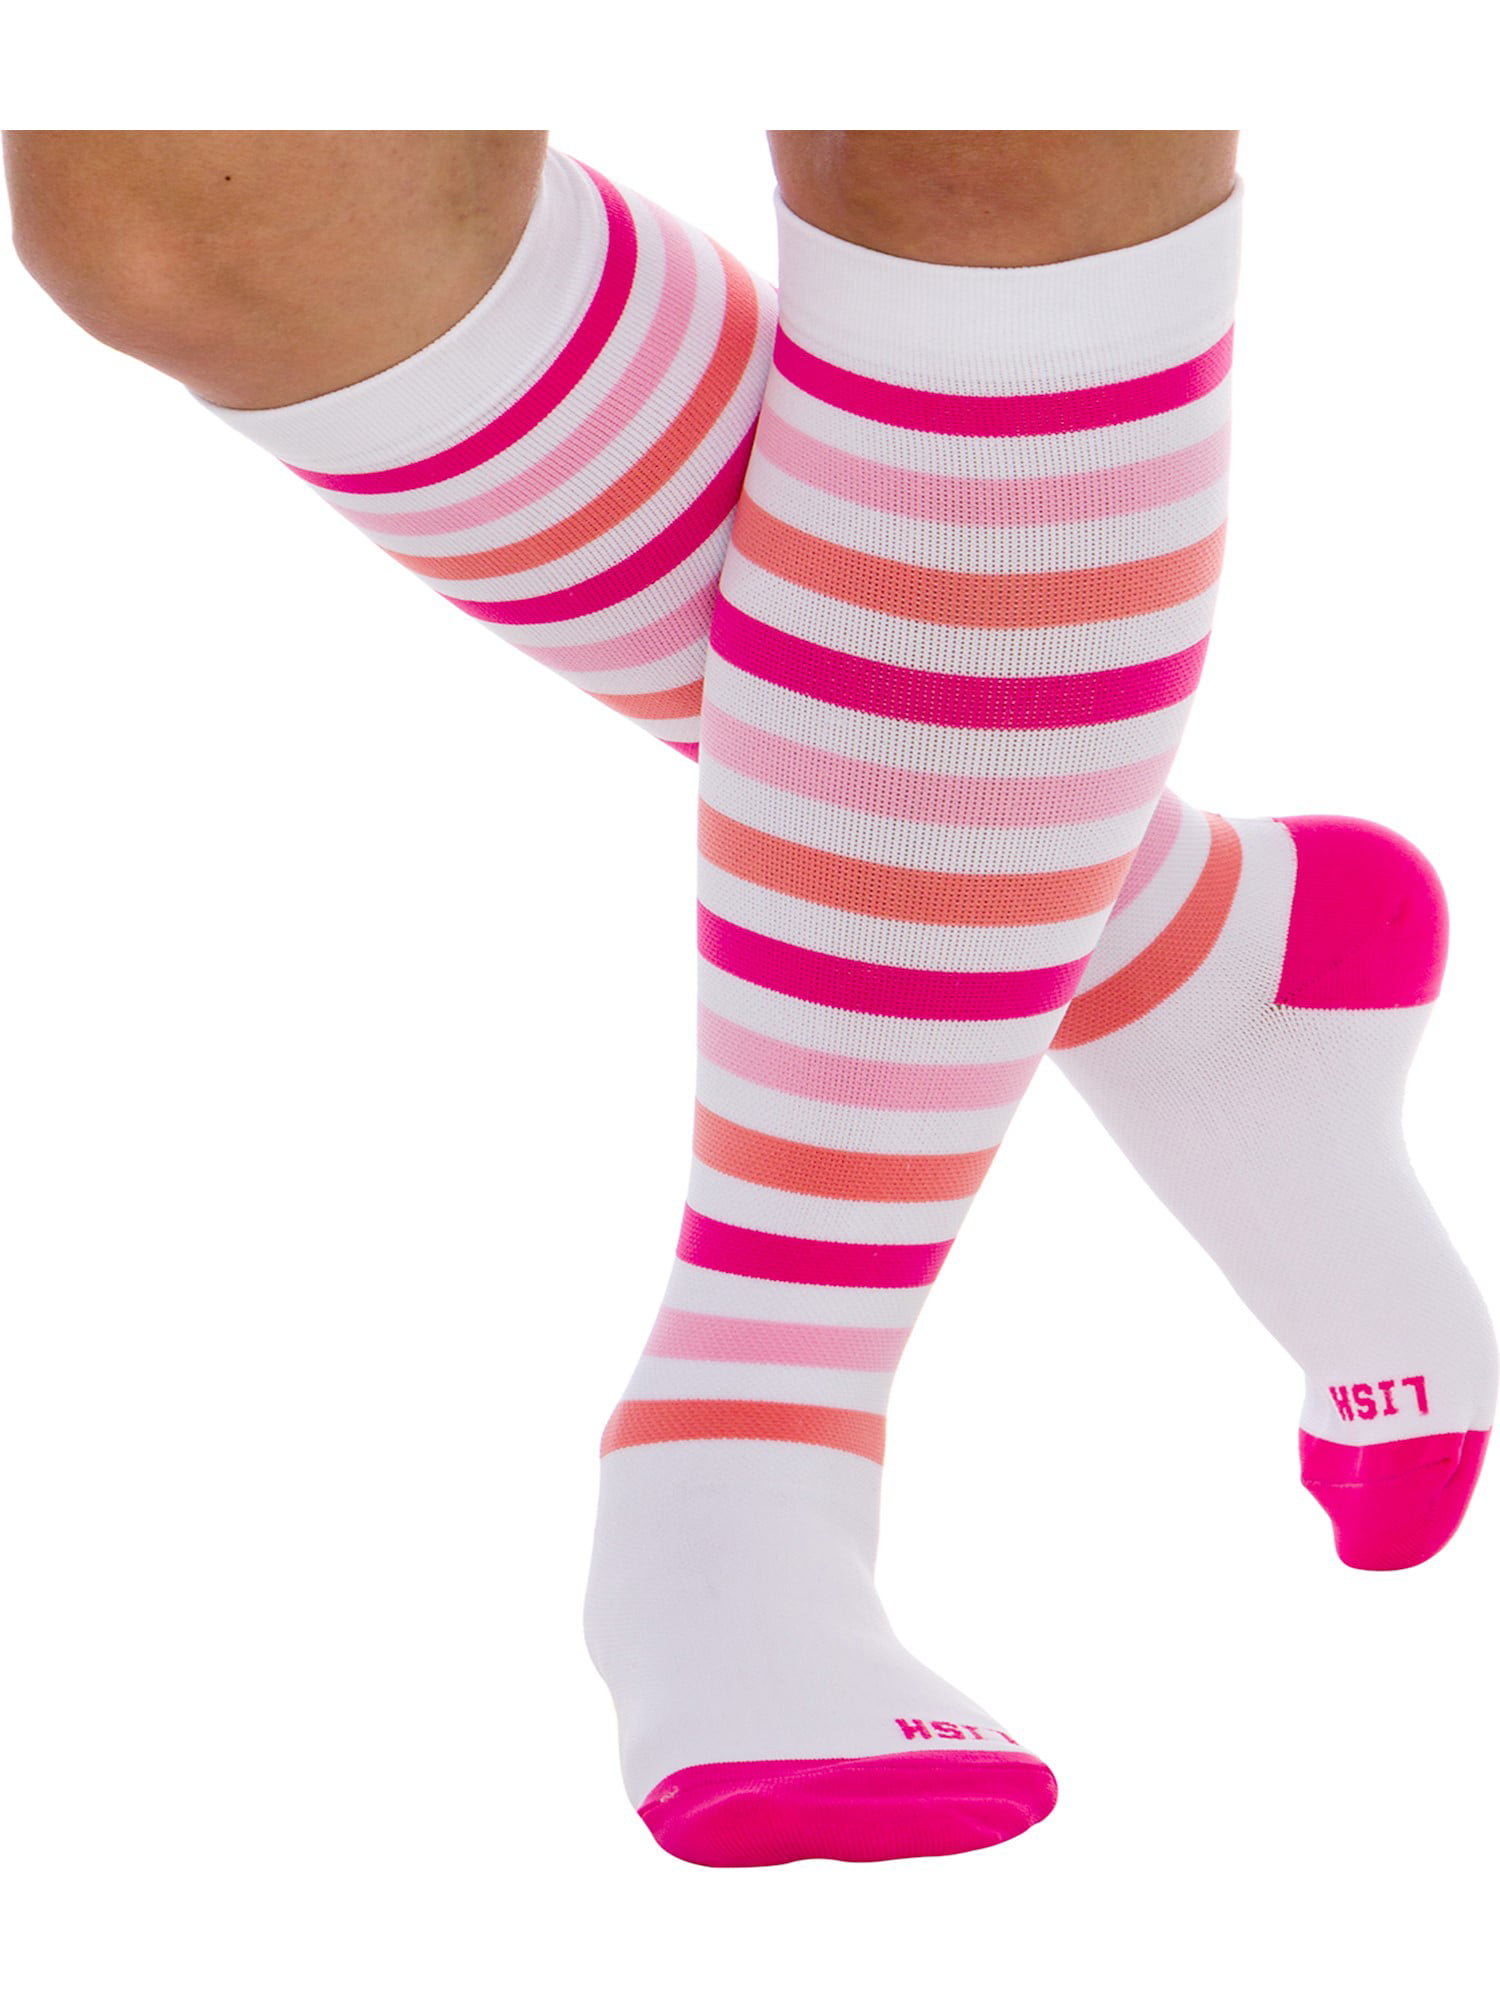 Plus size compression socks - optionhac